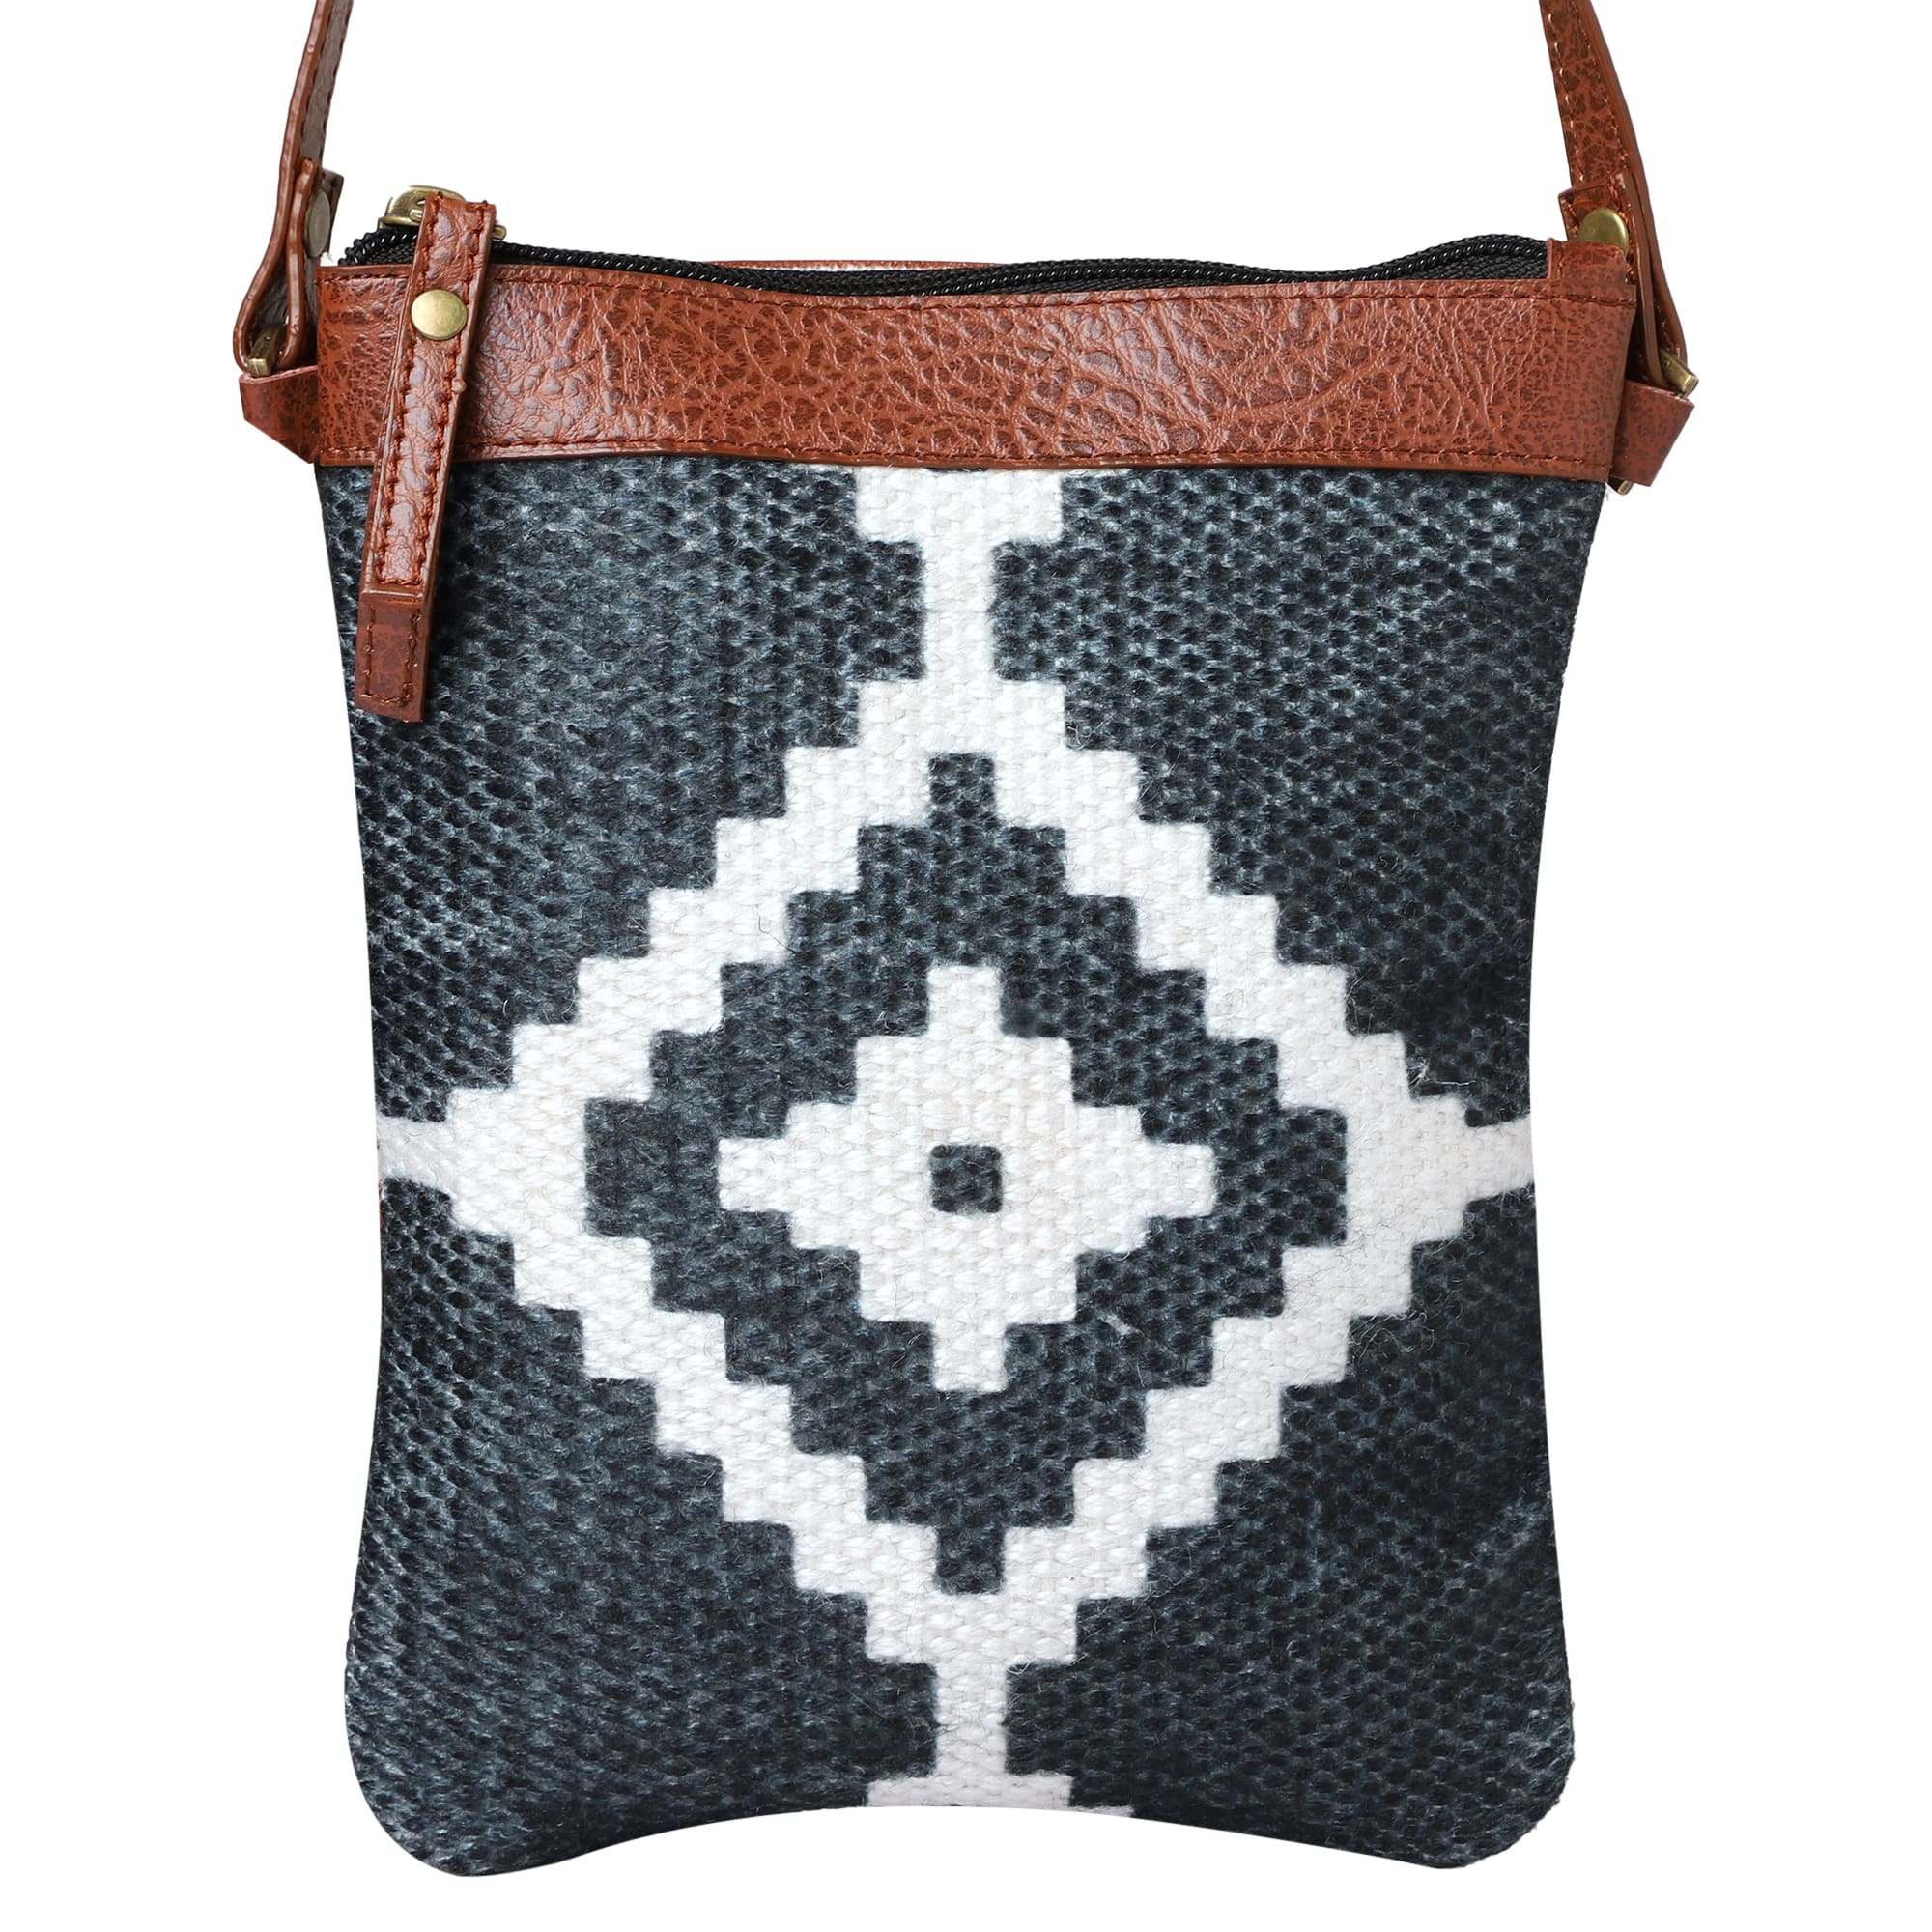 Mona B - Small Canvas Messenger Crossbody Bag | Wristlet Bag with Stylish Design for Women (Sloane) Brown